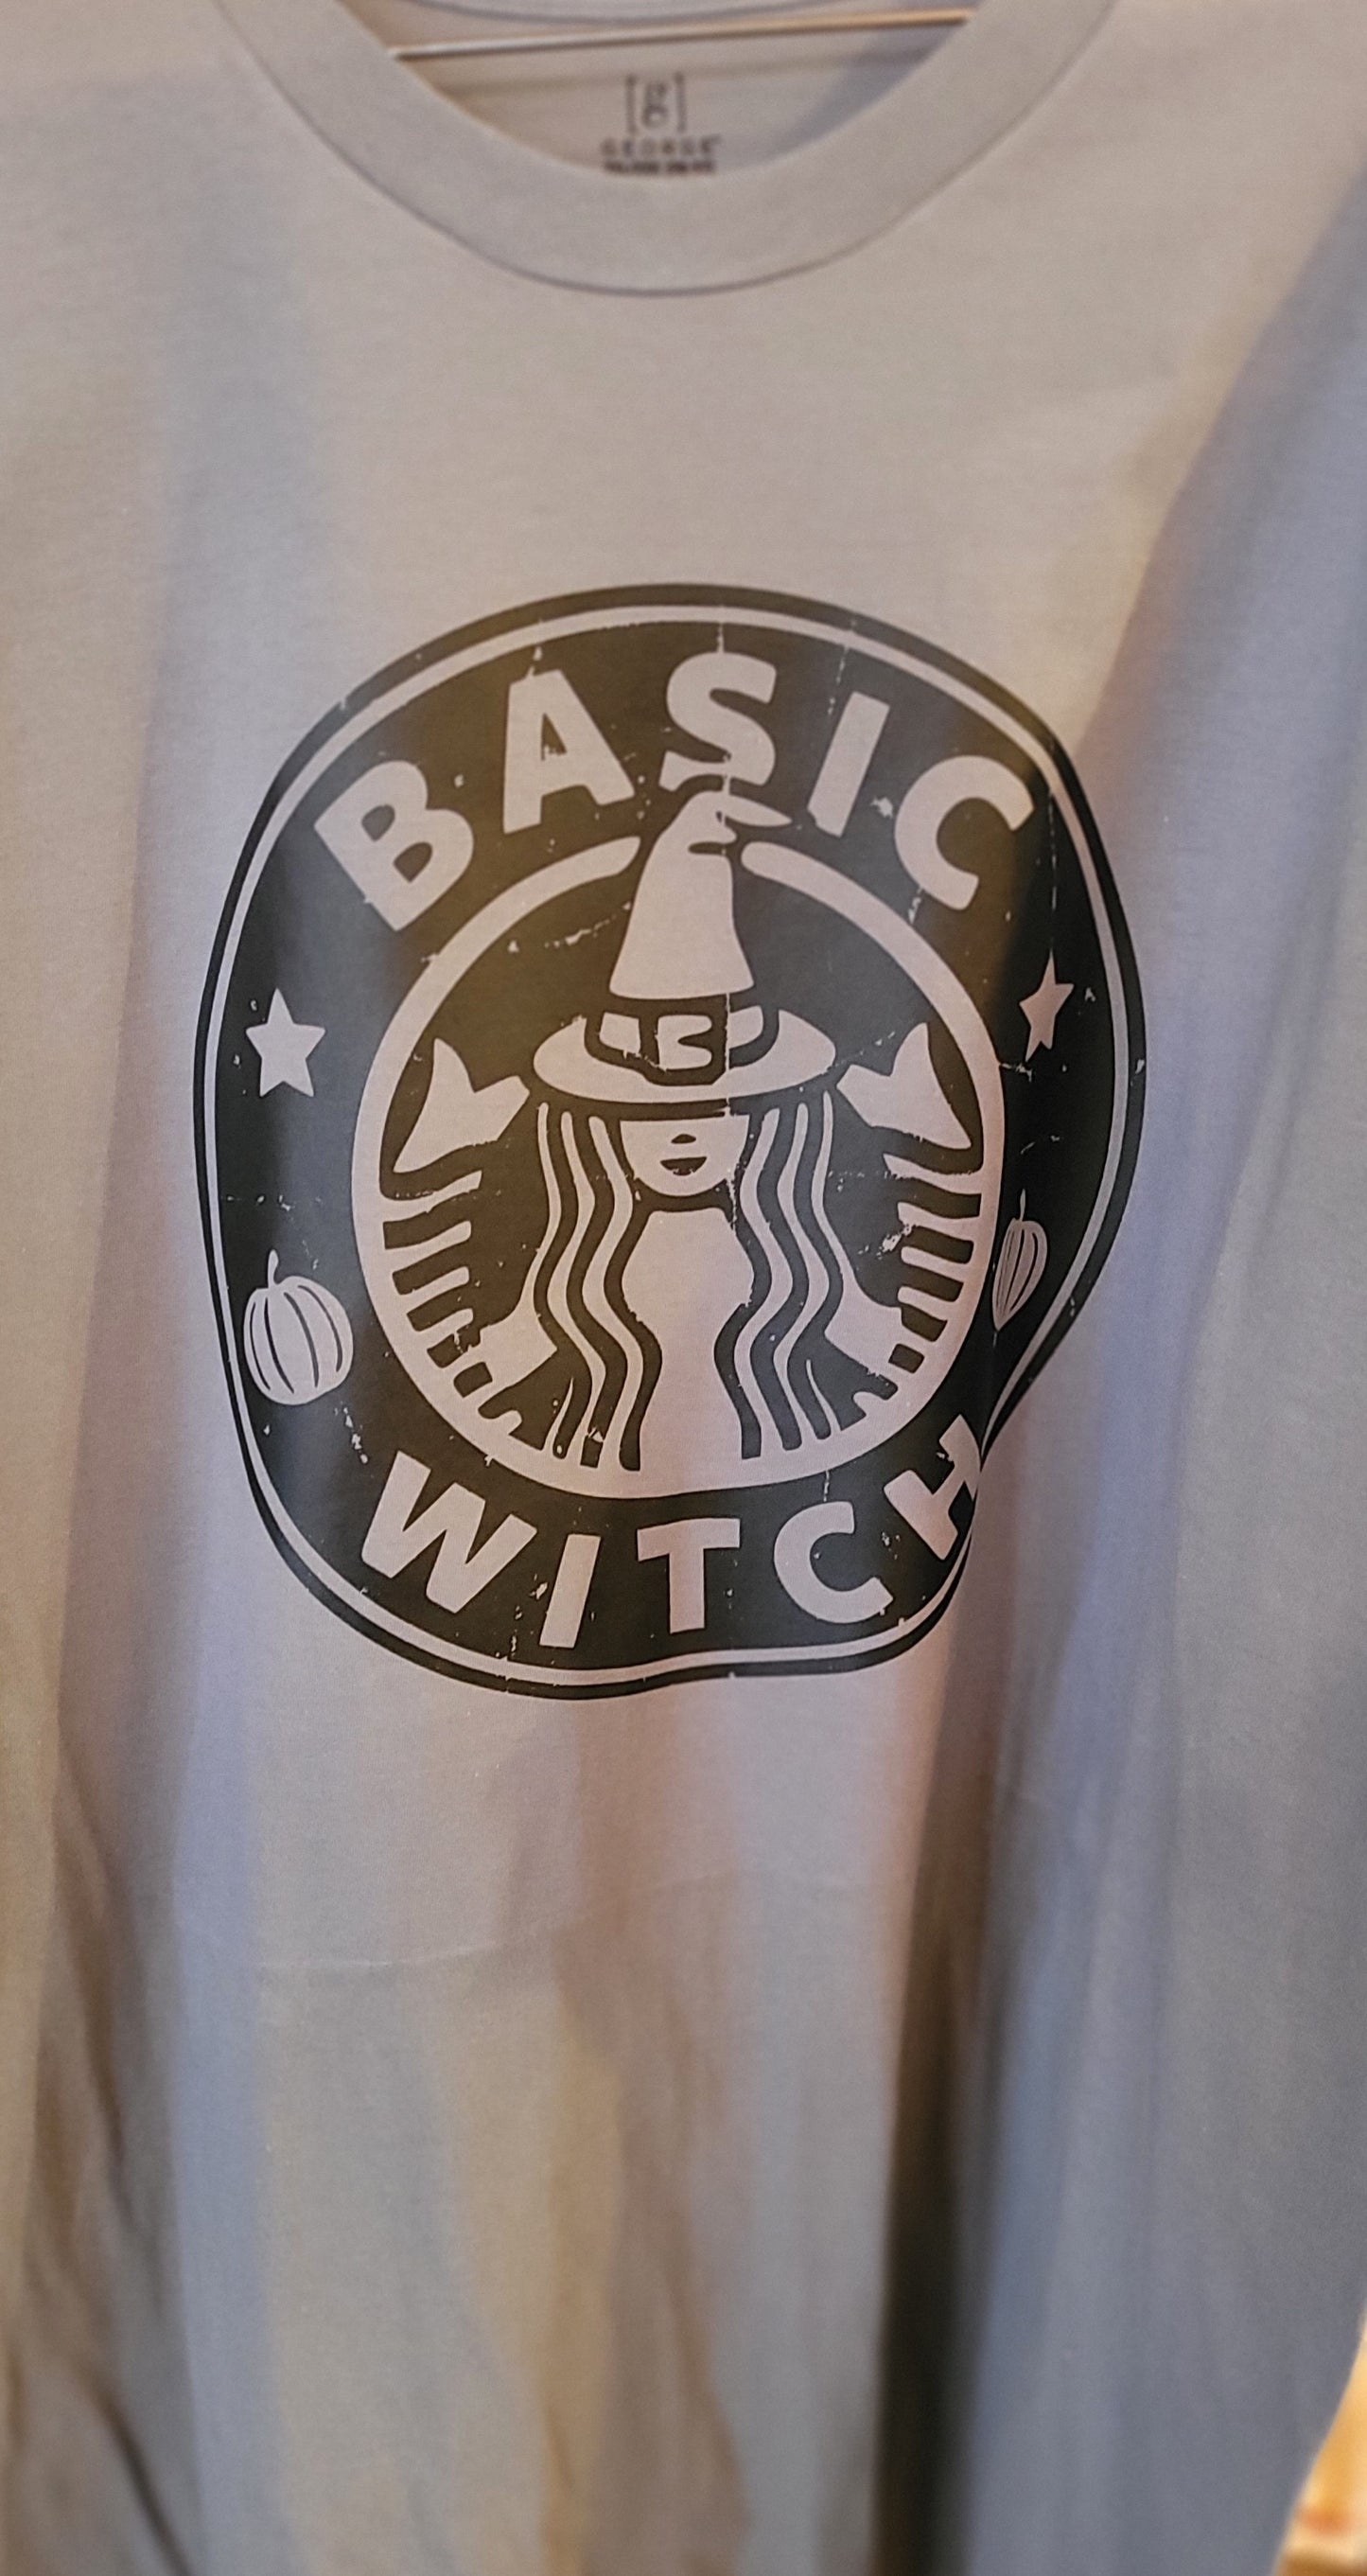 Basic Witch Tshirt